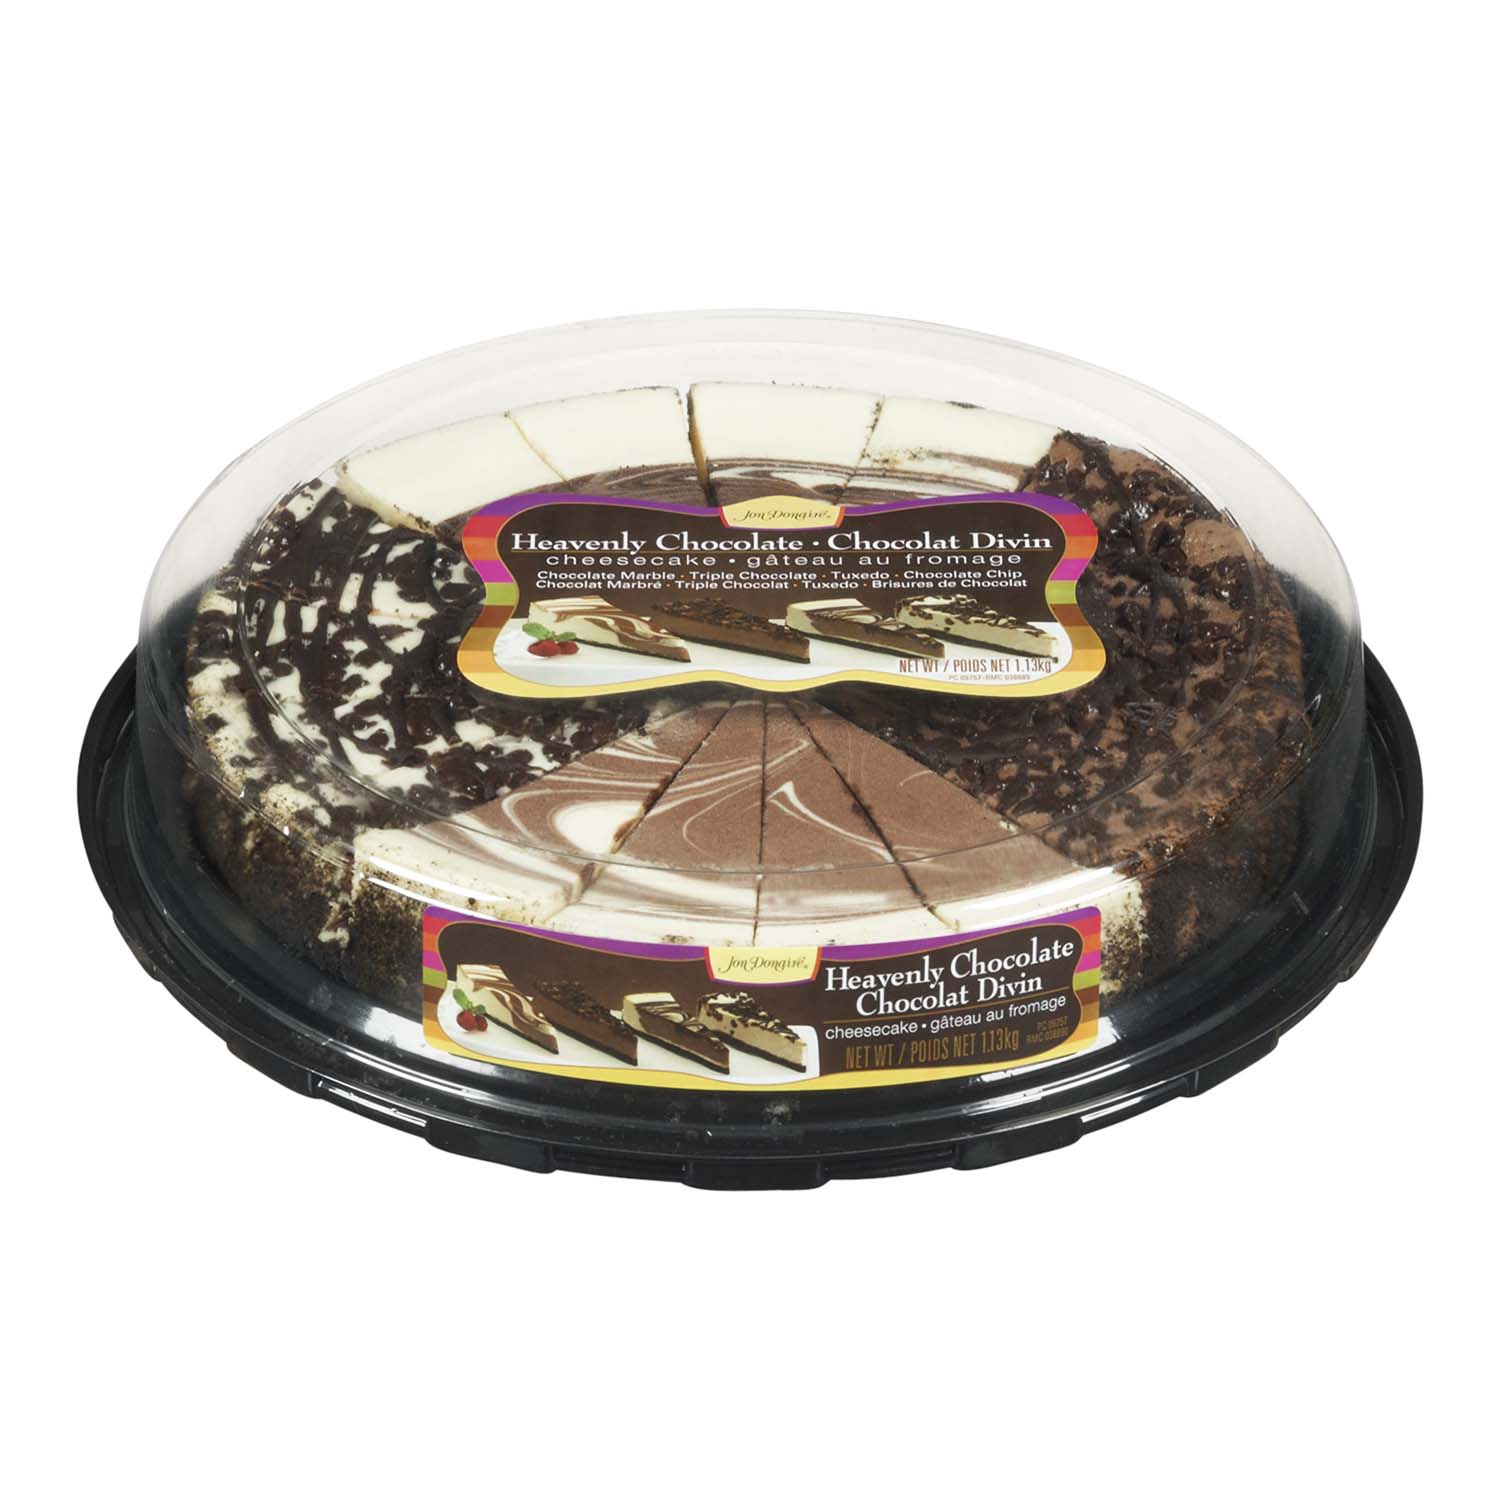 Jon Donaire Heavenly Chocolate Cheesecake 1.13 kg | Powell's Supermarkets